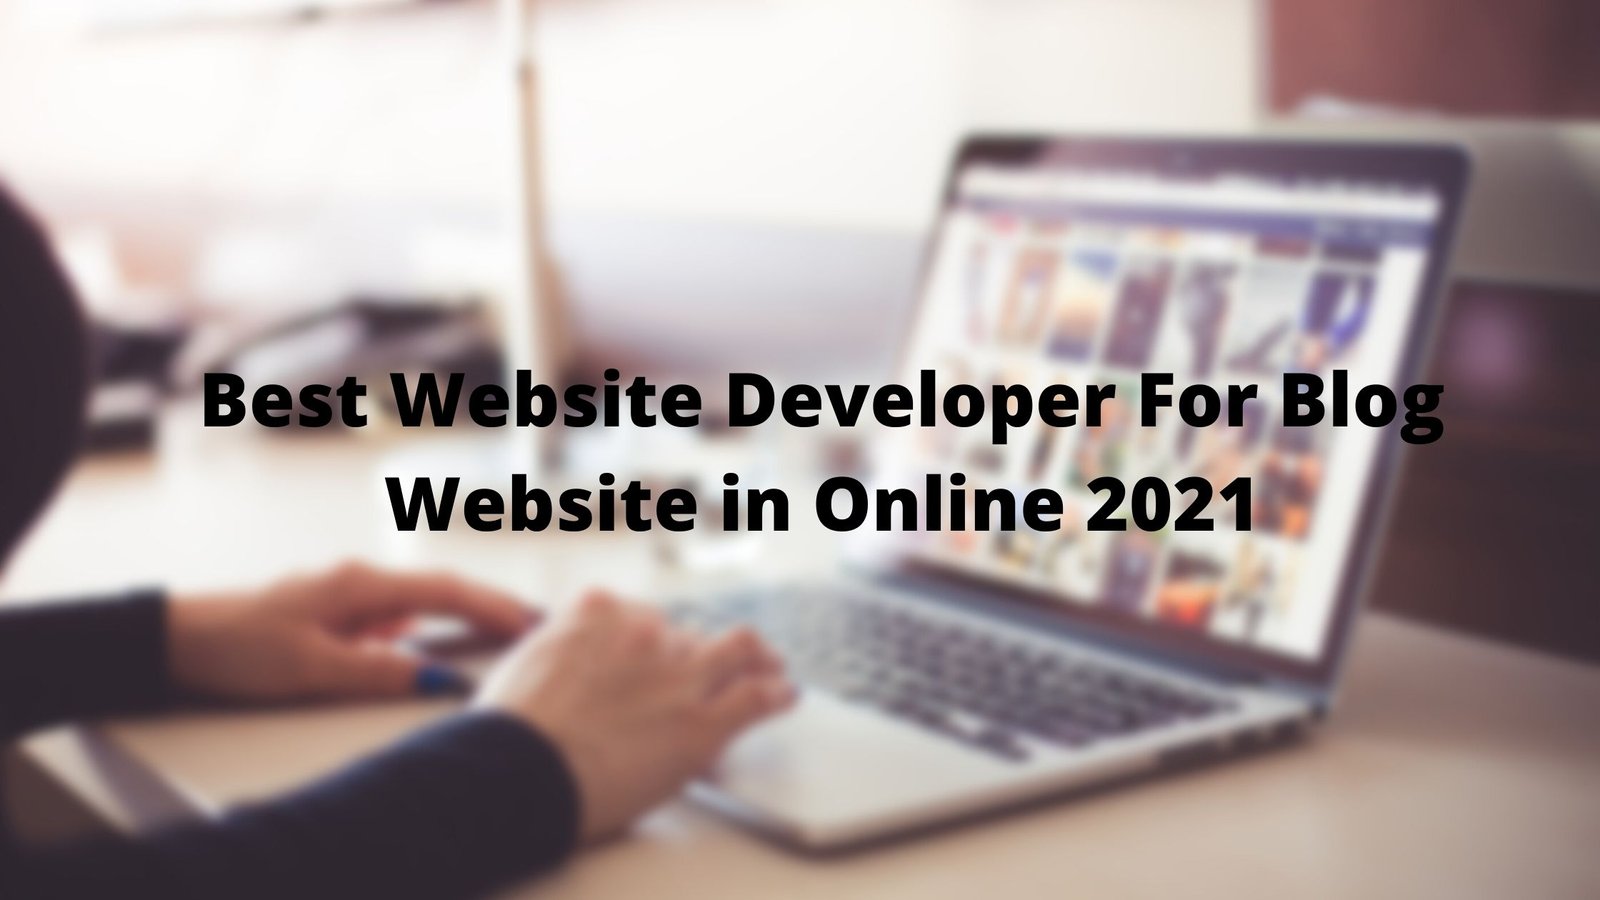 Top 7 Best Website Developer For Blog Website in Online 2021